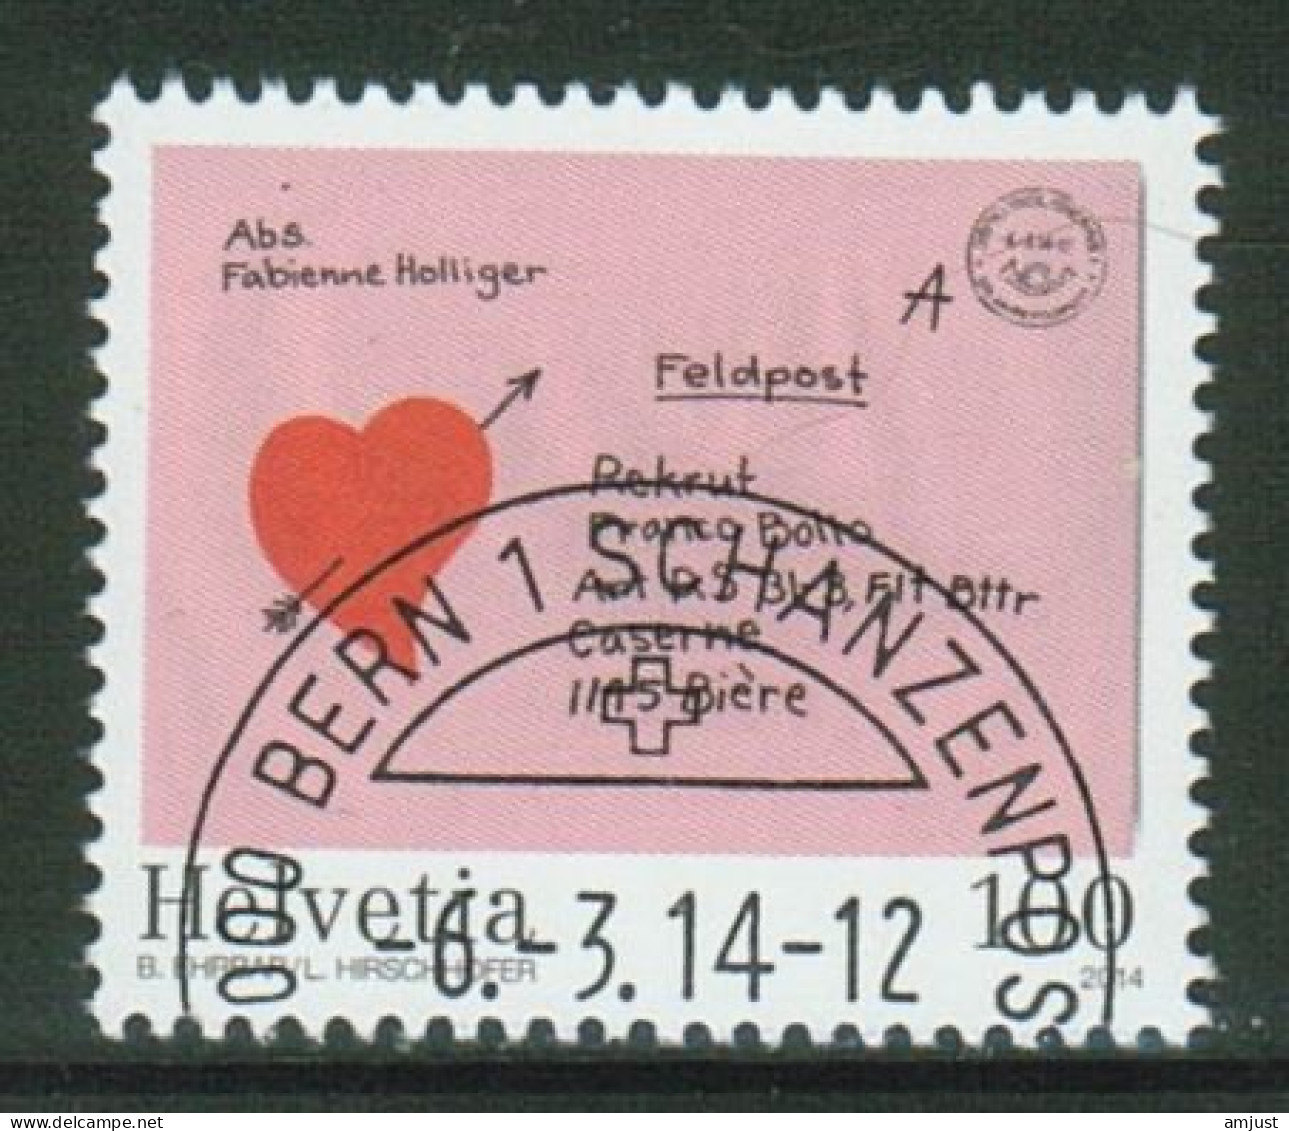 Suisse // Schweiz// Switzerland// 2014  // Lettre D'amour Passionnée No. 1495 - Used Stamps